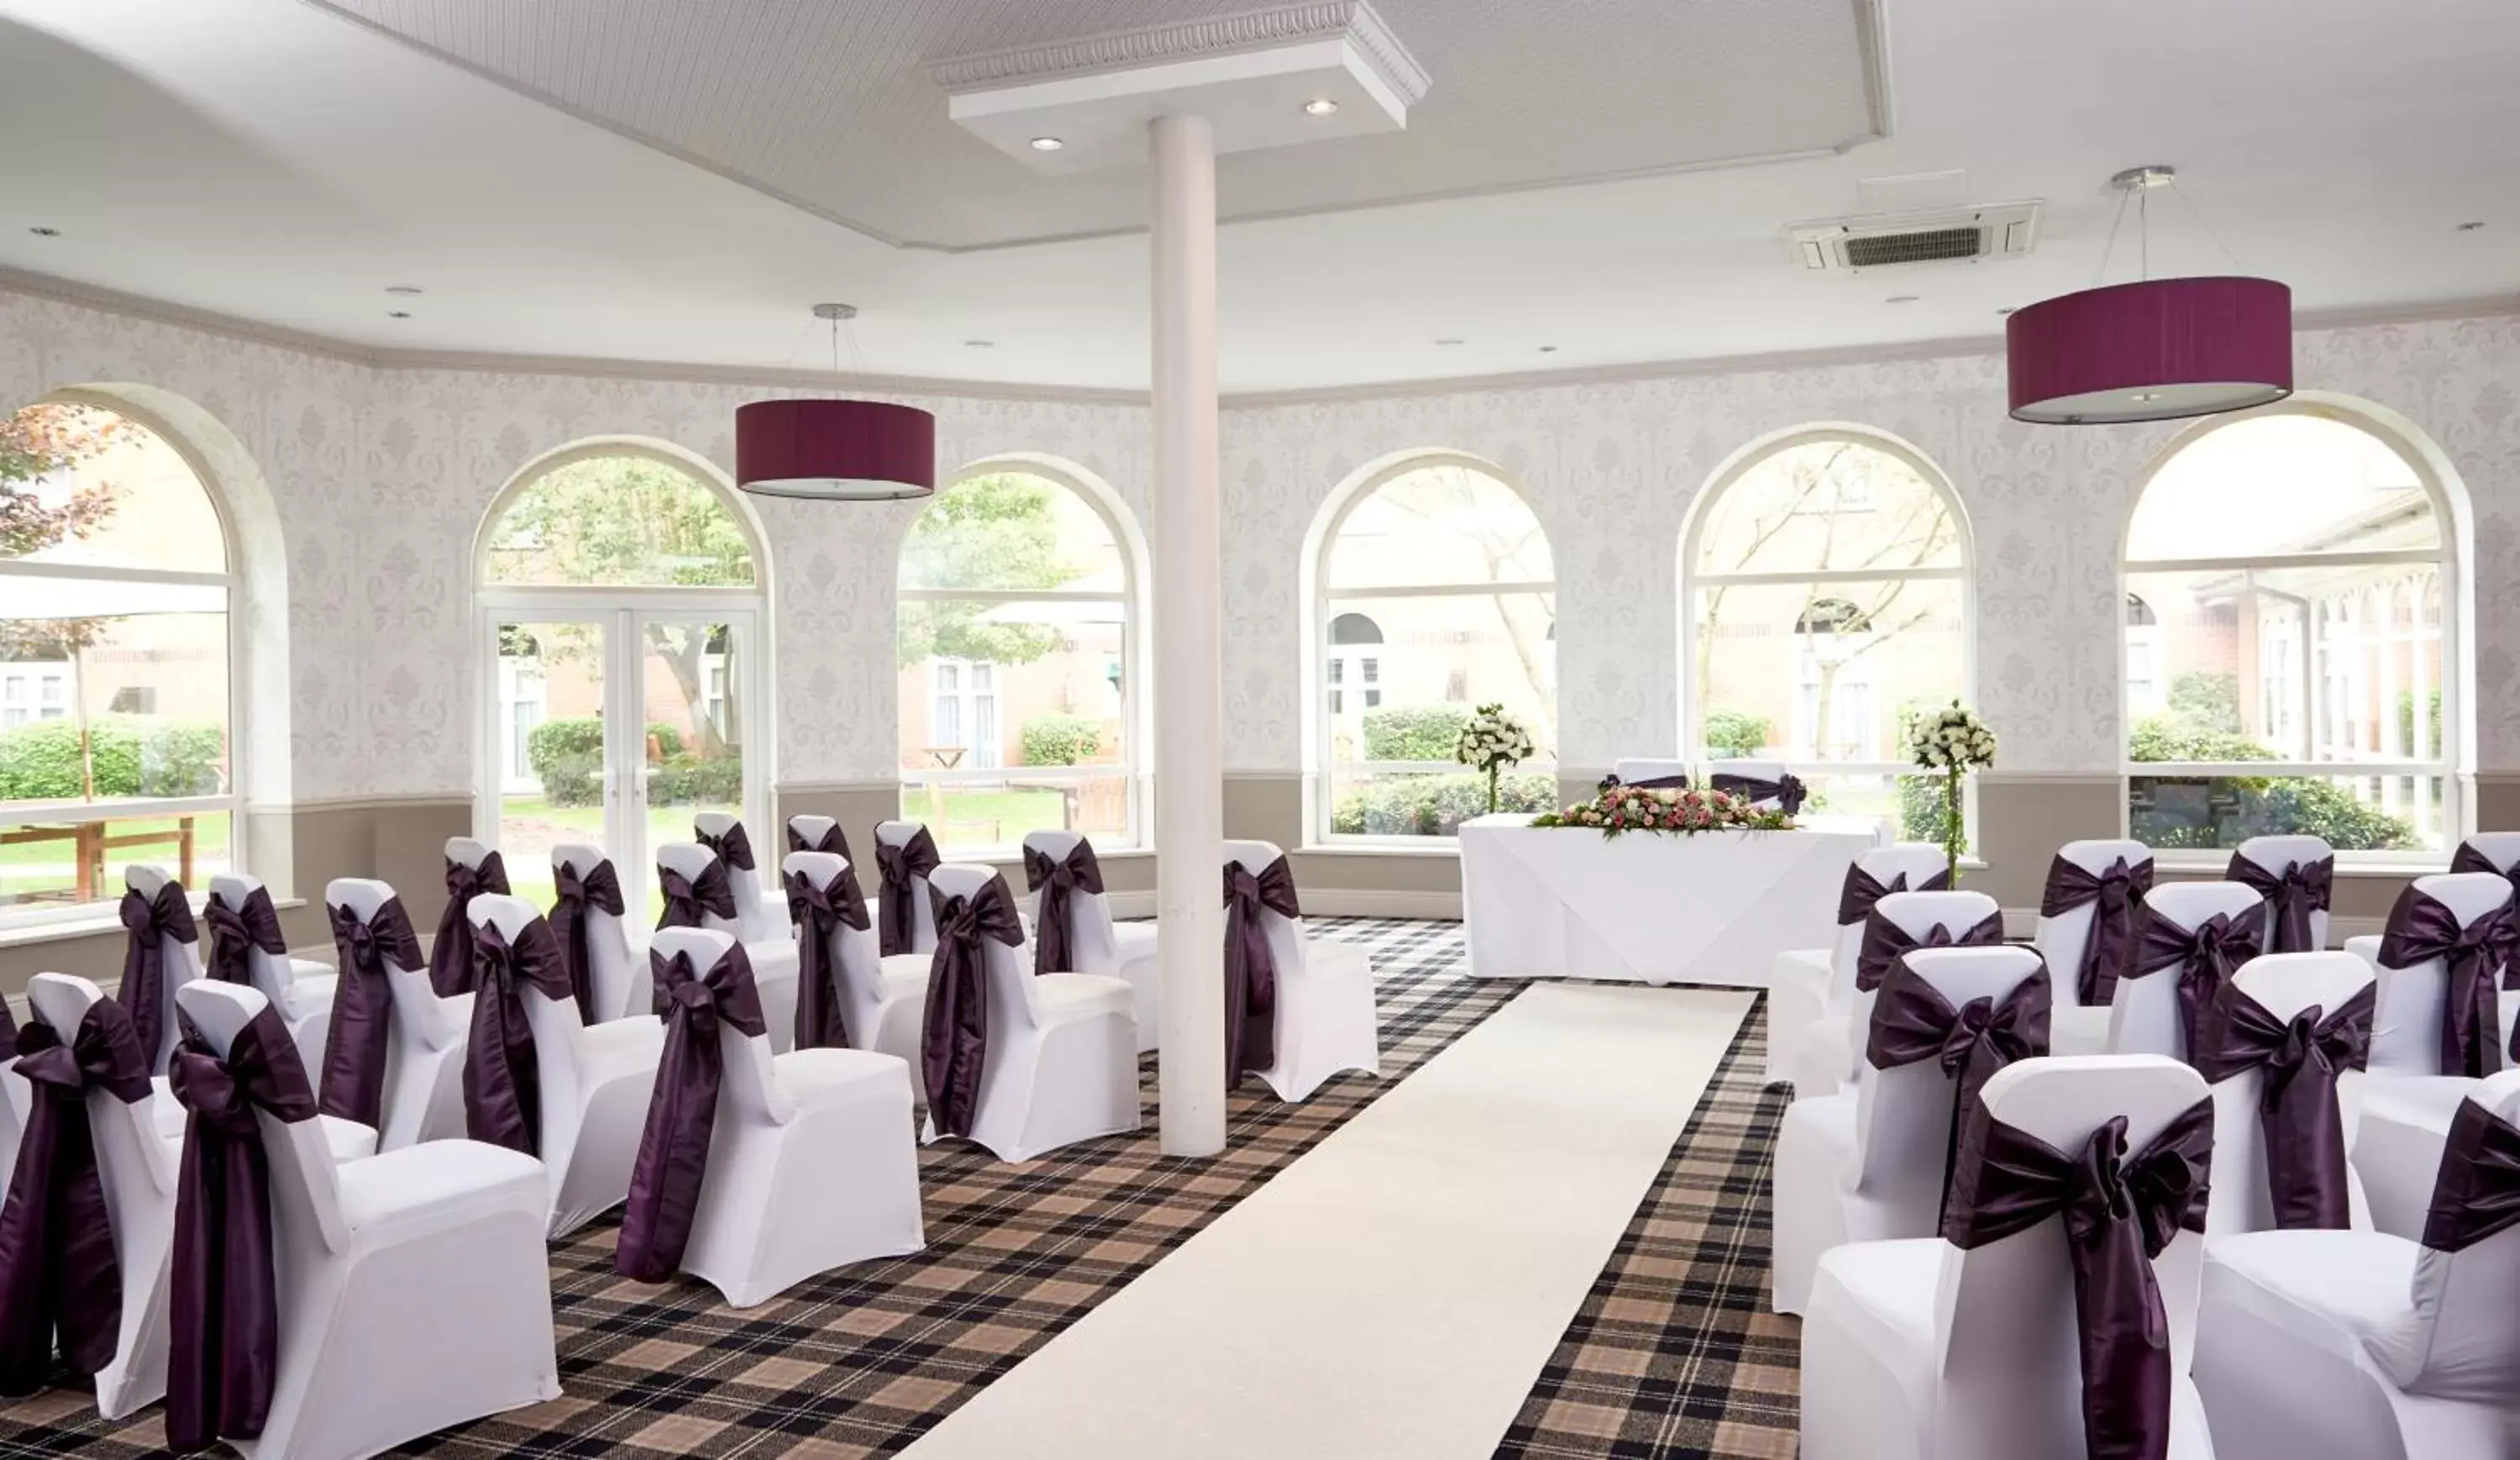 Banquet/Function facilities, Banquet Facilities in The Regency Hotel